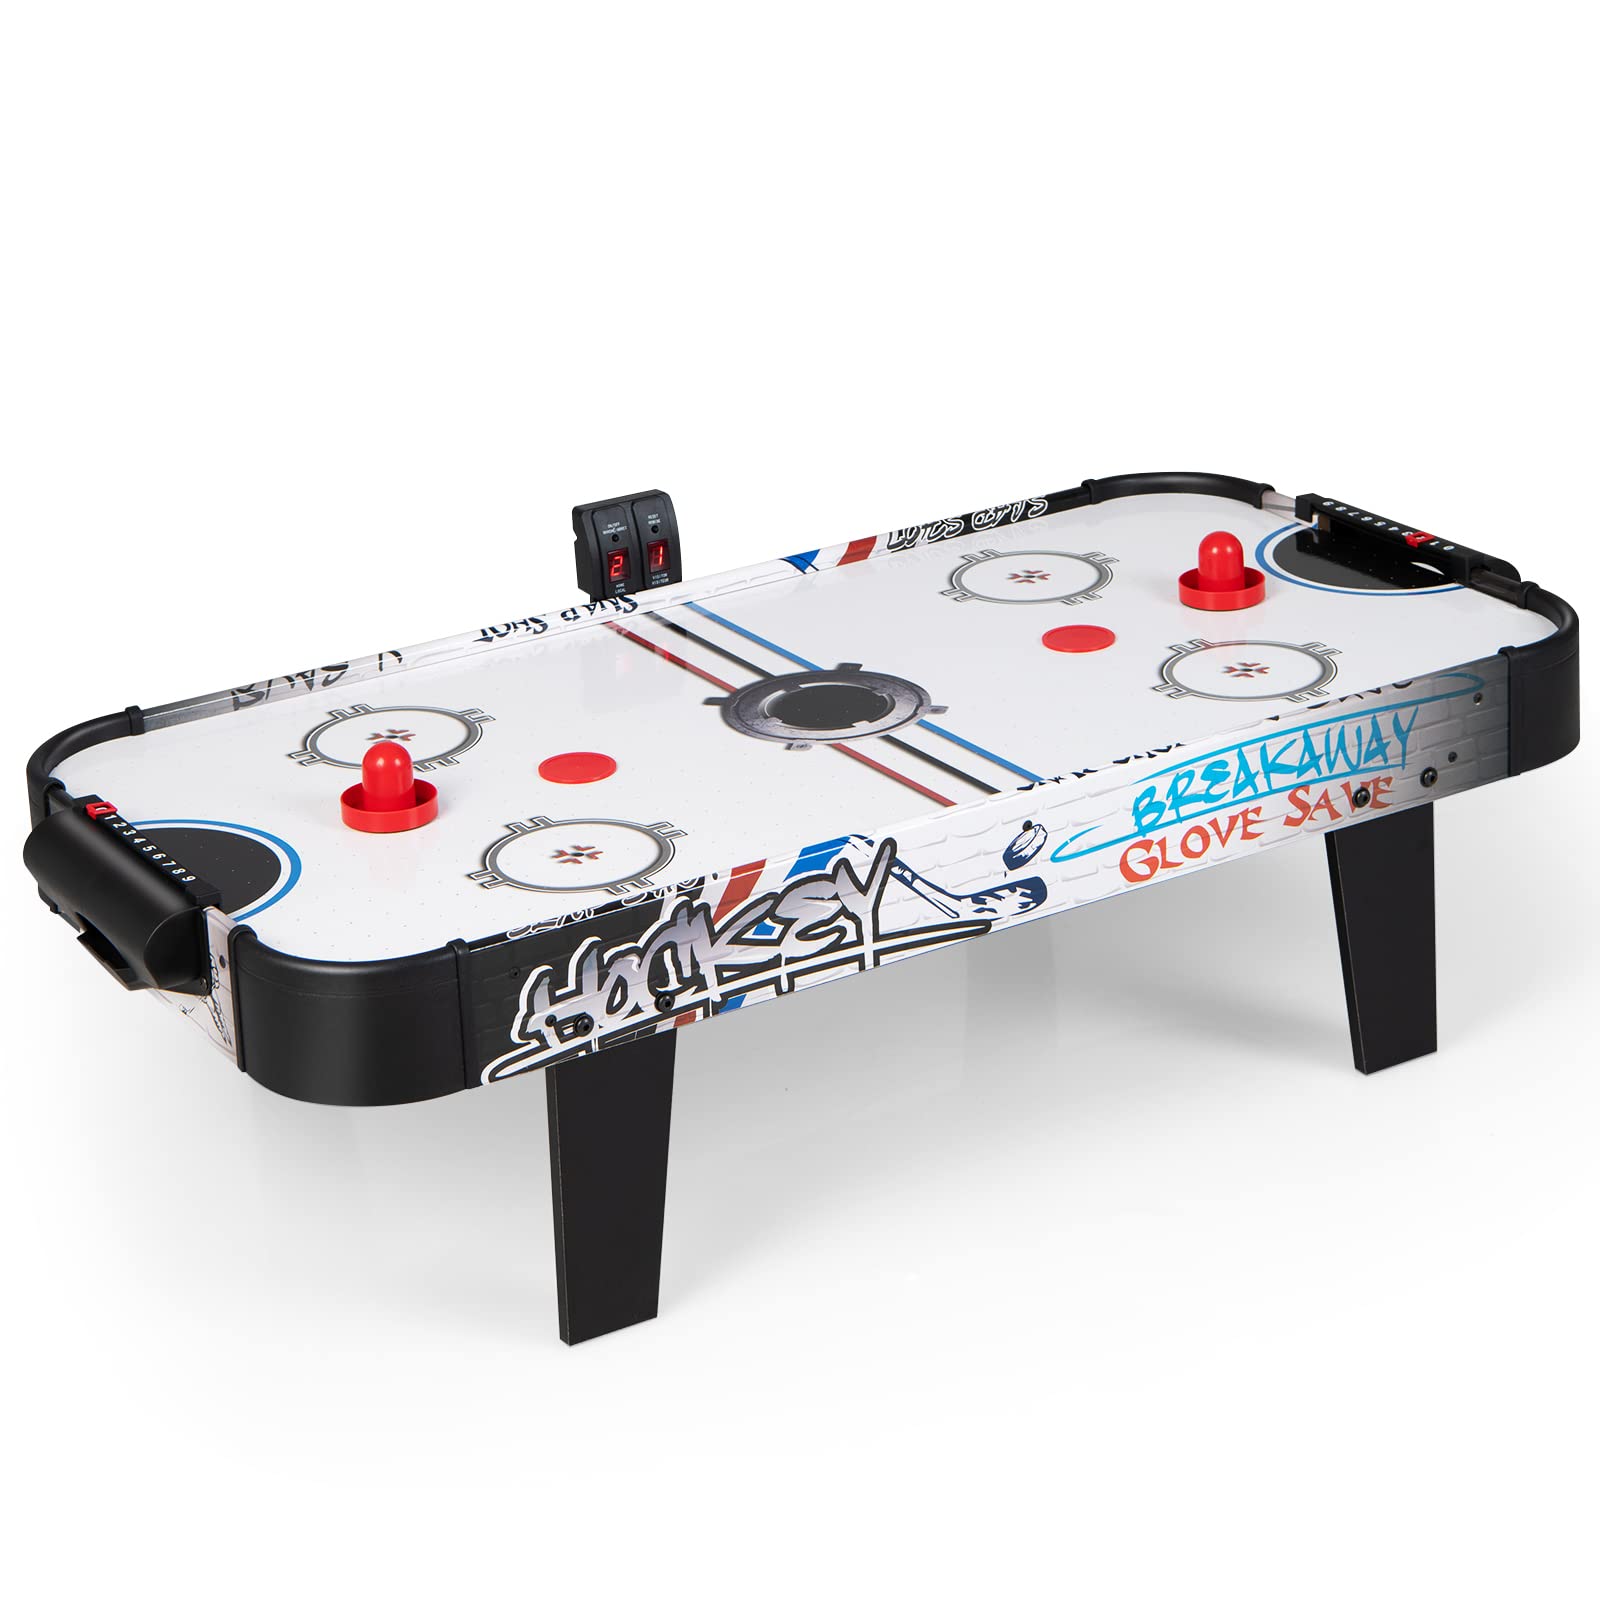 Giantex 42" Air Hockey Table, with 2 Pucks, 2 Pushers, LED Electronic Scoring